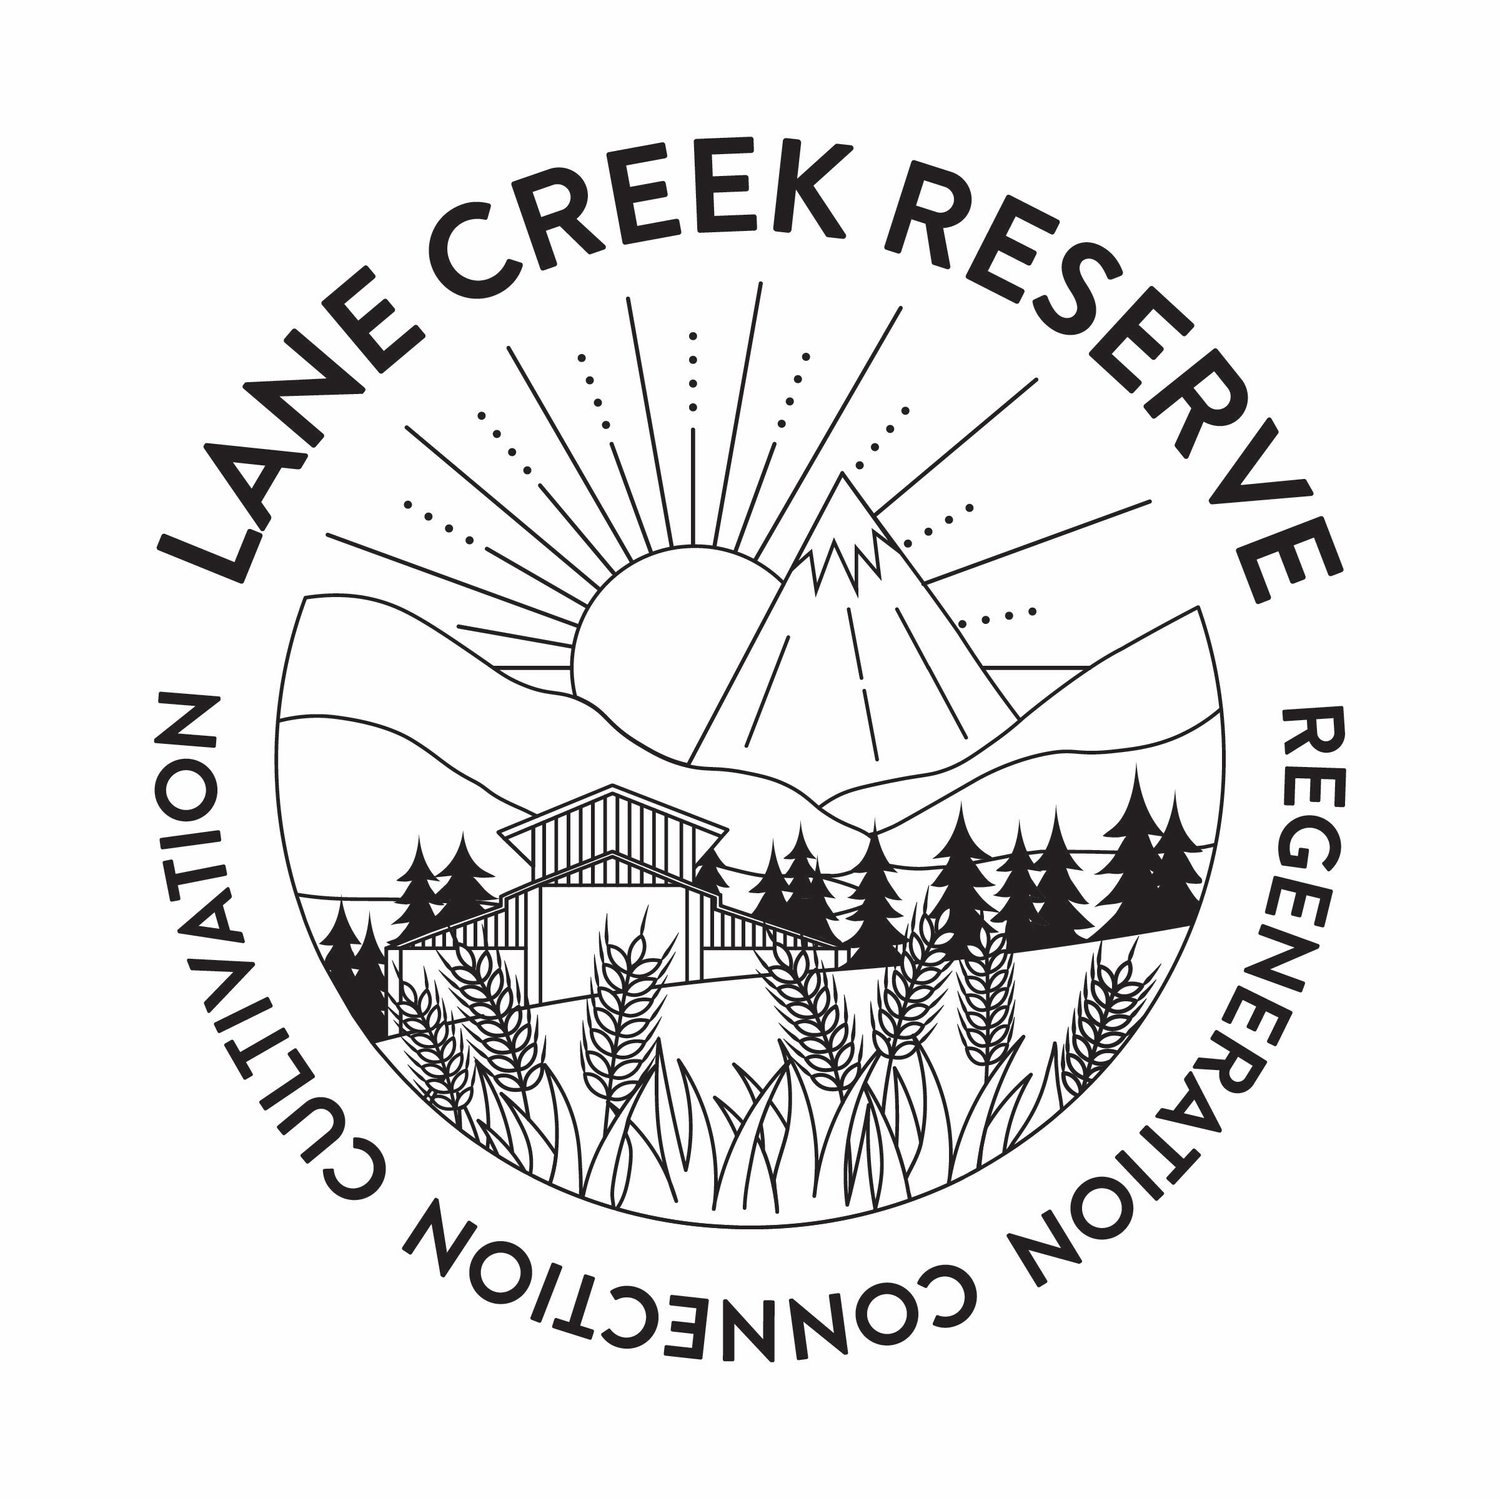 Lane Creek Reserve